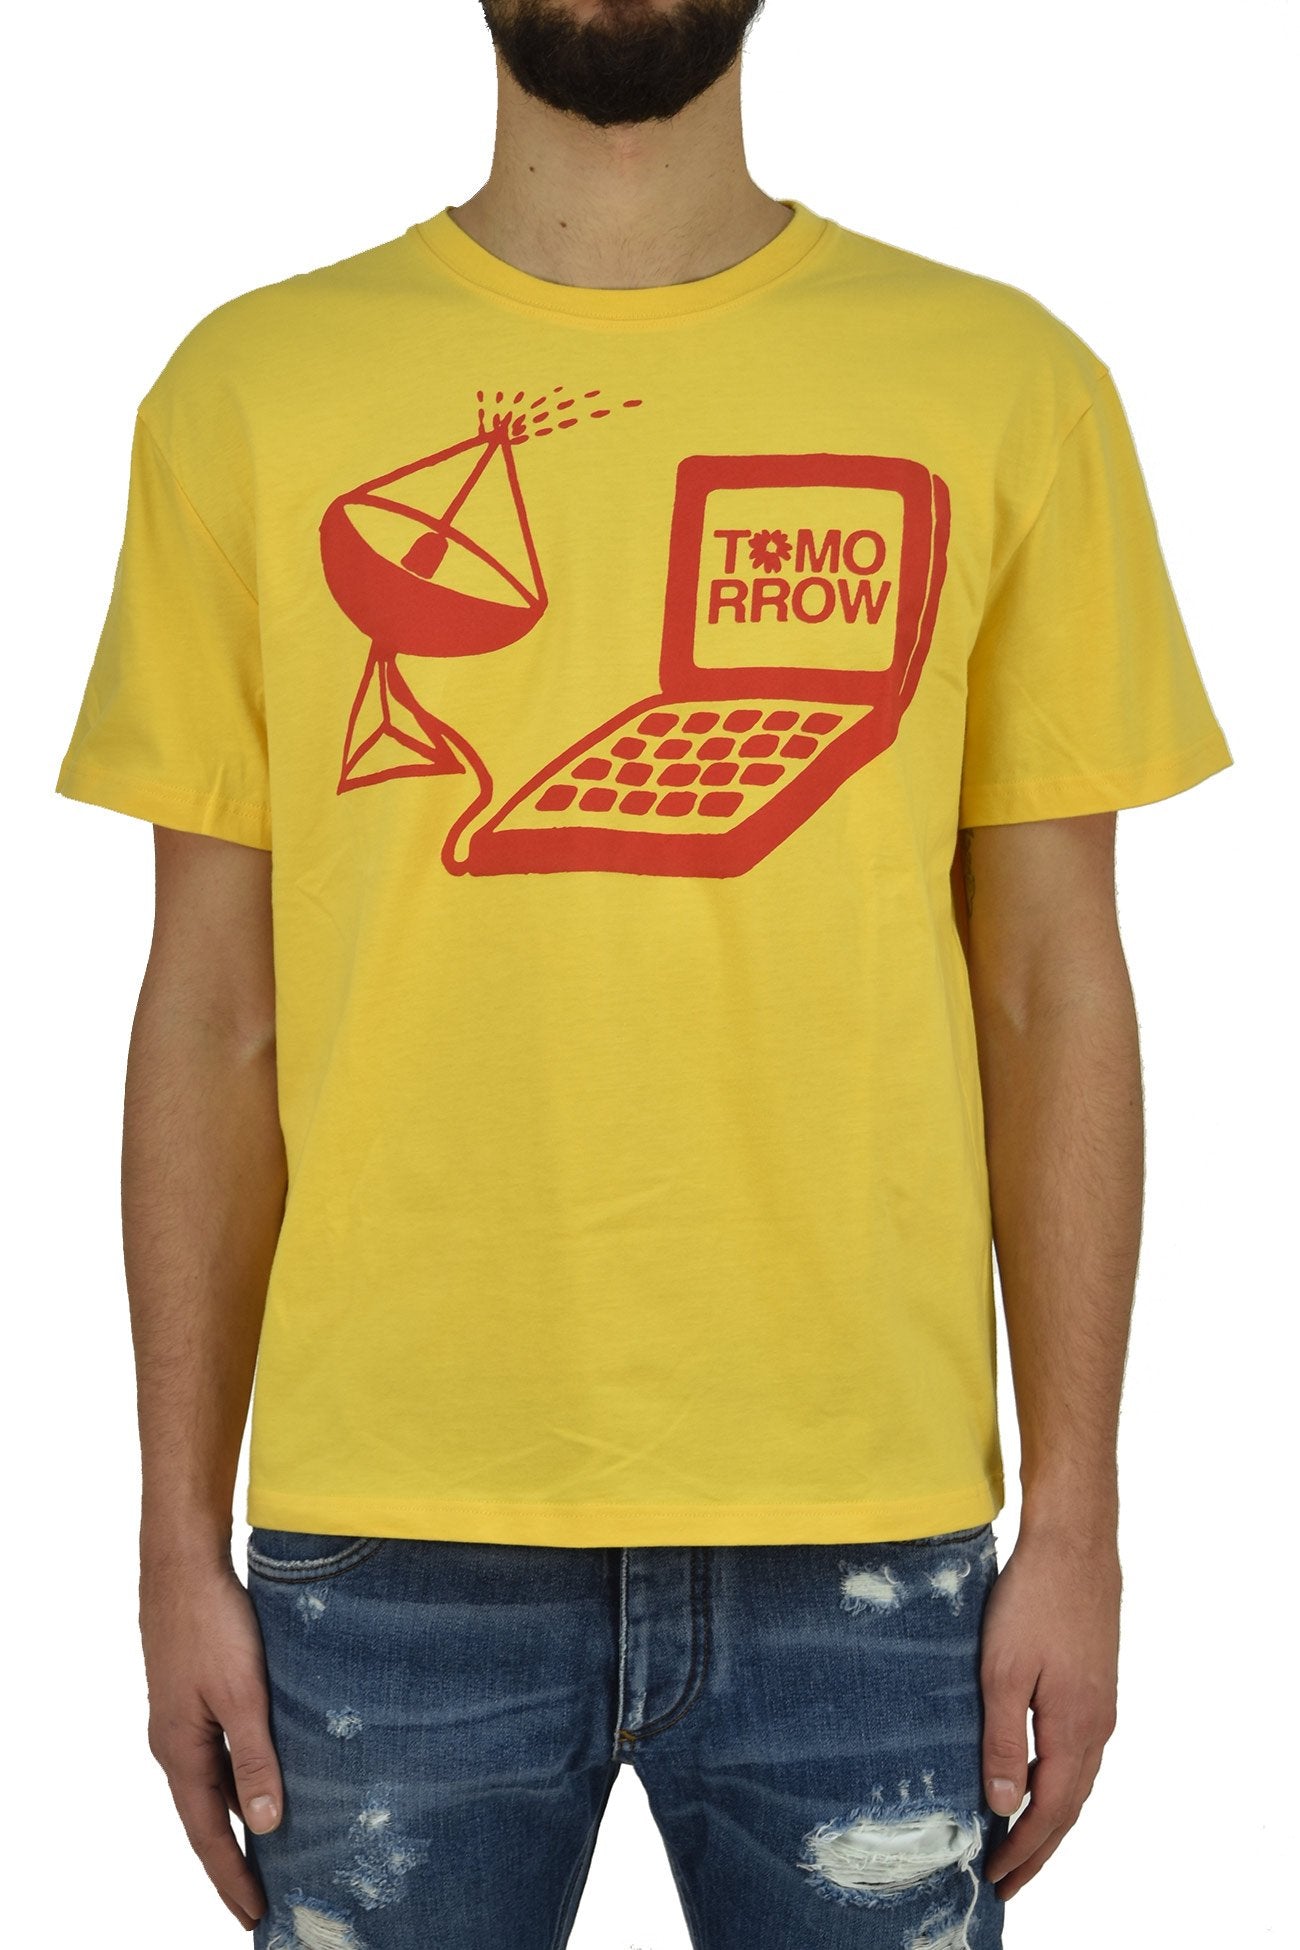 Stella McCartney T-shirt Gialla Uomo Cotone Stampa Mod.MN0453010SIP047041